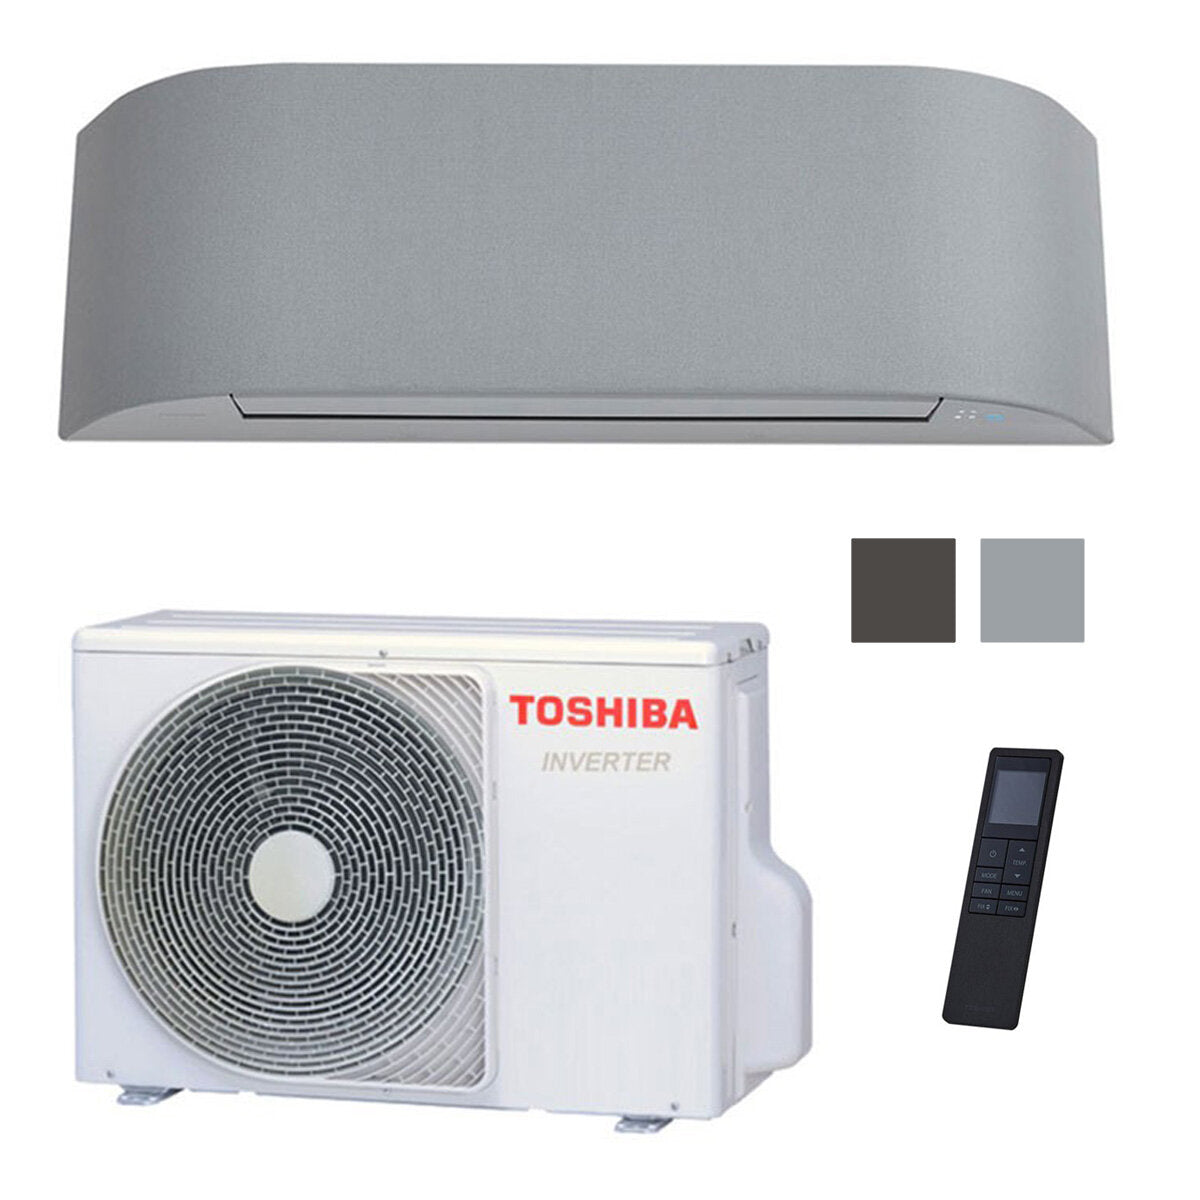 Toshiba Haori 12000 btu air conditioner R32 A +++ inverter with wifi